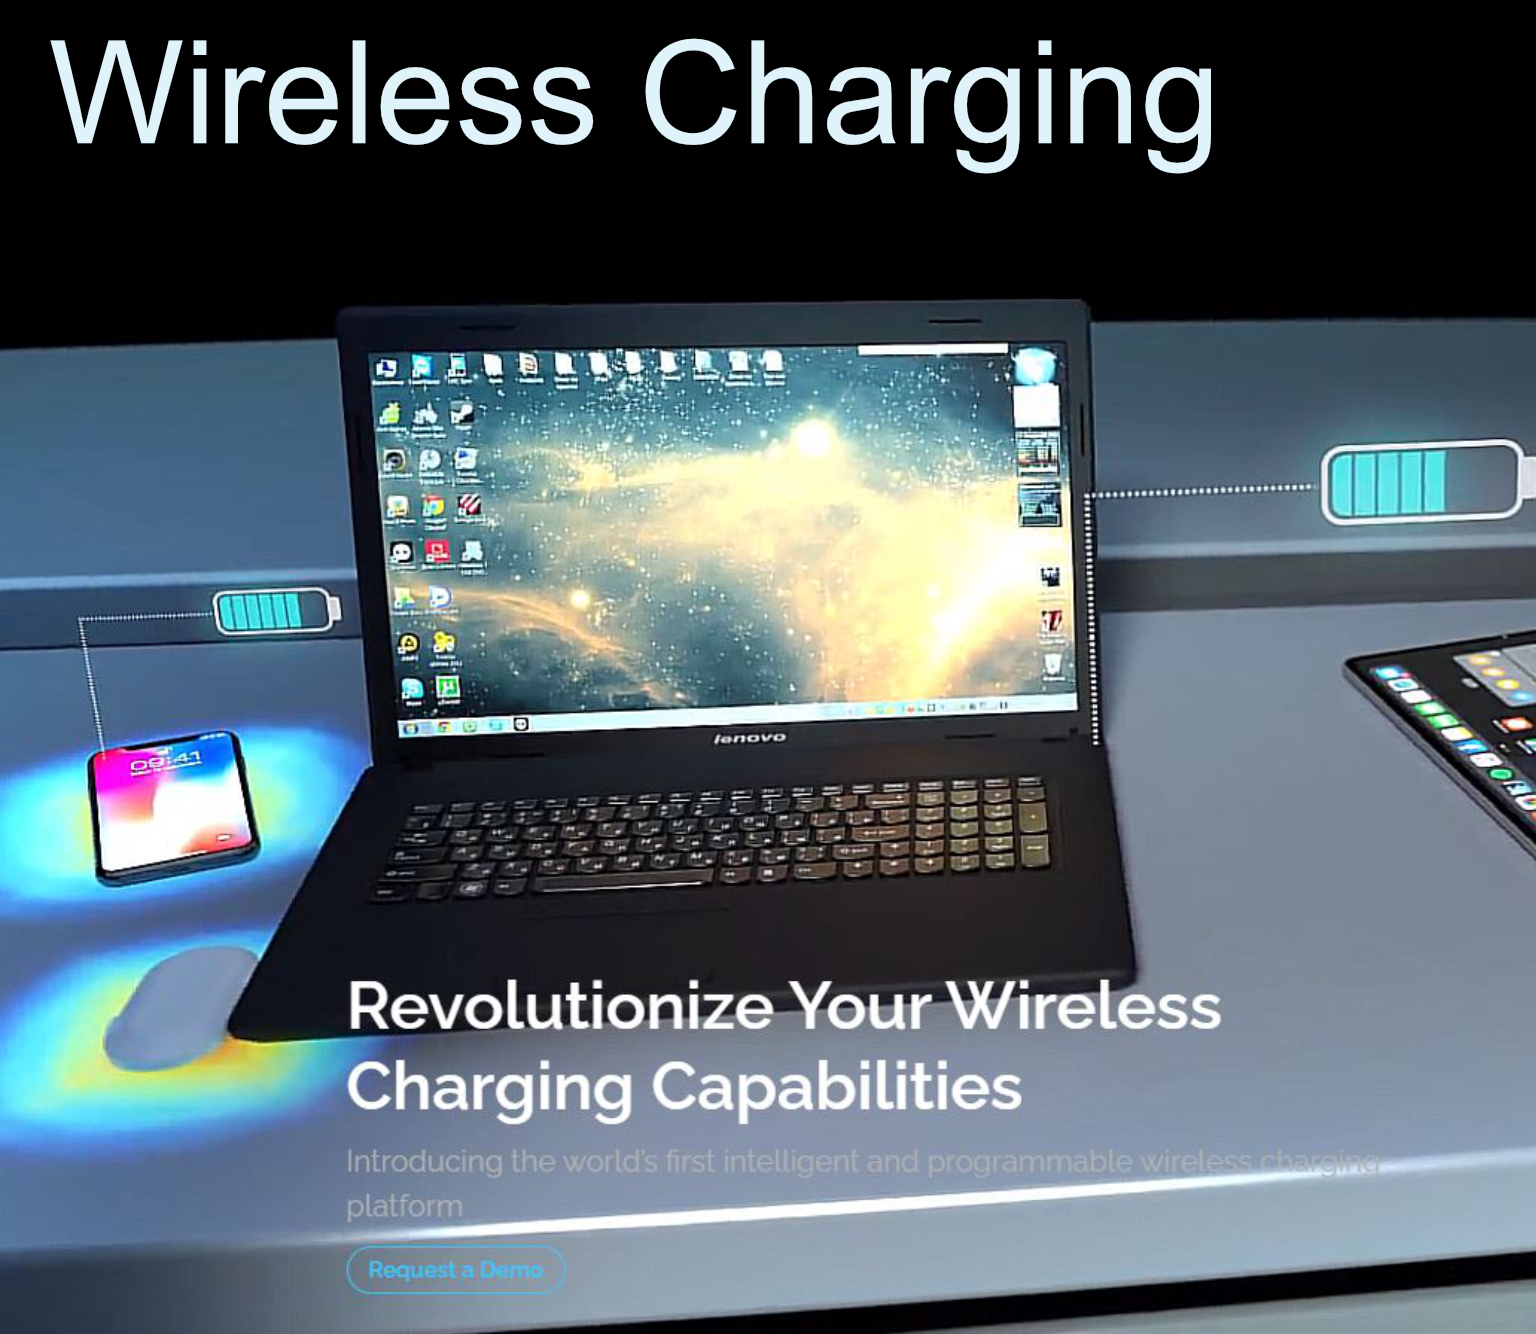 Revolutionize your wireless charging capabilities